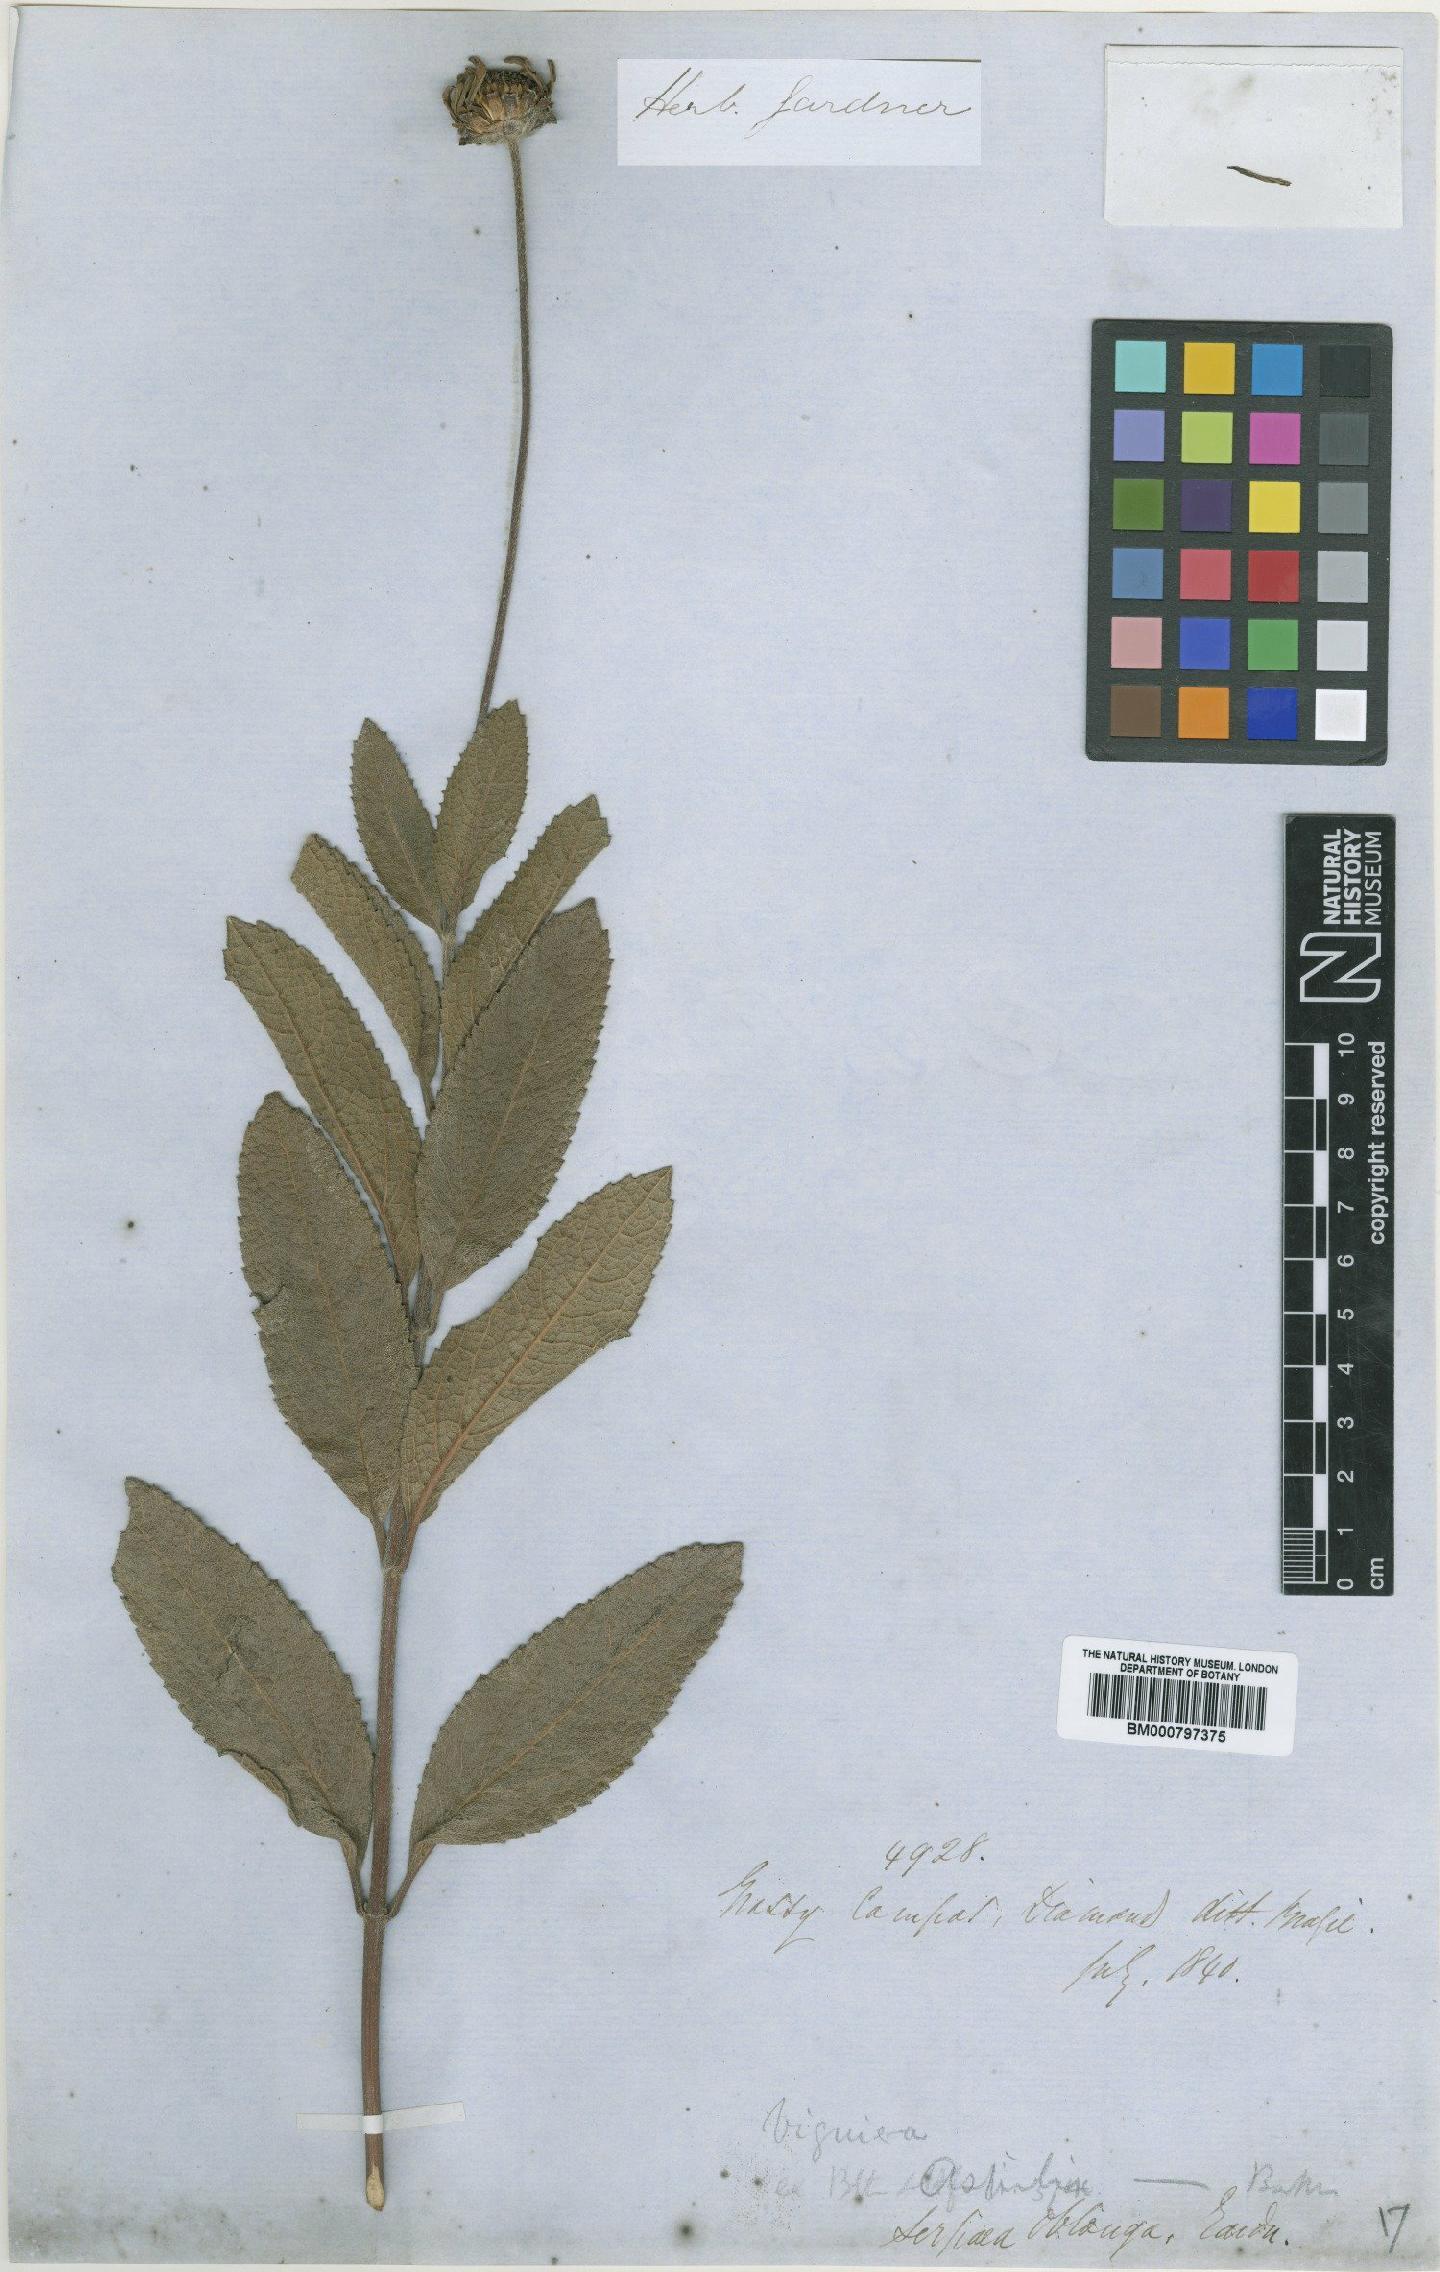 To NHMUK collection (Aspilia oblonga Baker; Type; NHMUK:ecatalogue:4990155)